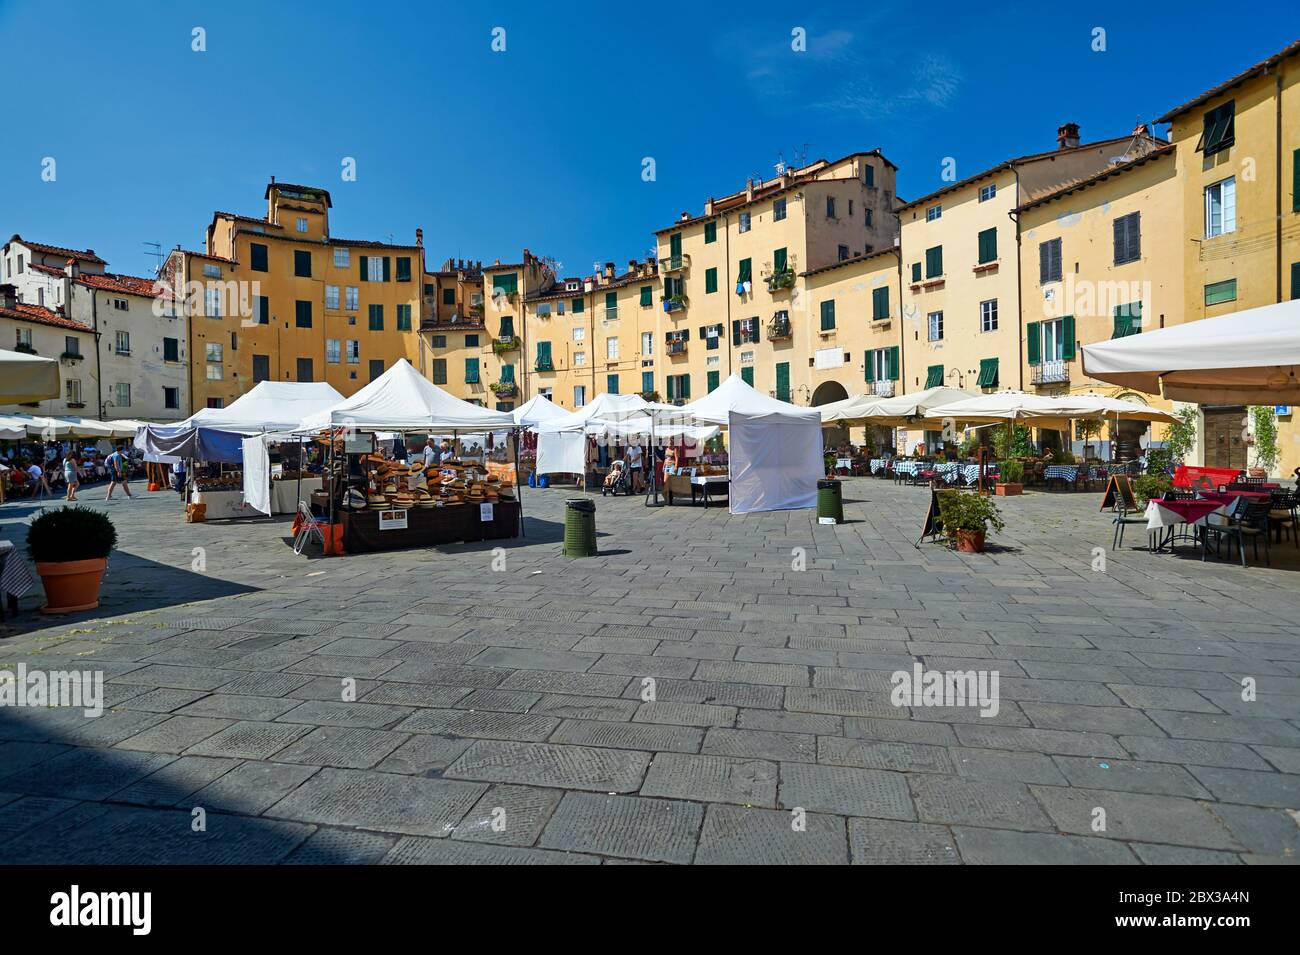 Piazza dell'Anfiteatro in Lucca, Italy Stock Photo